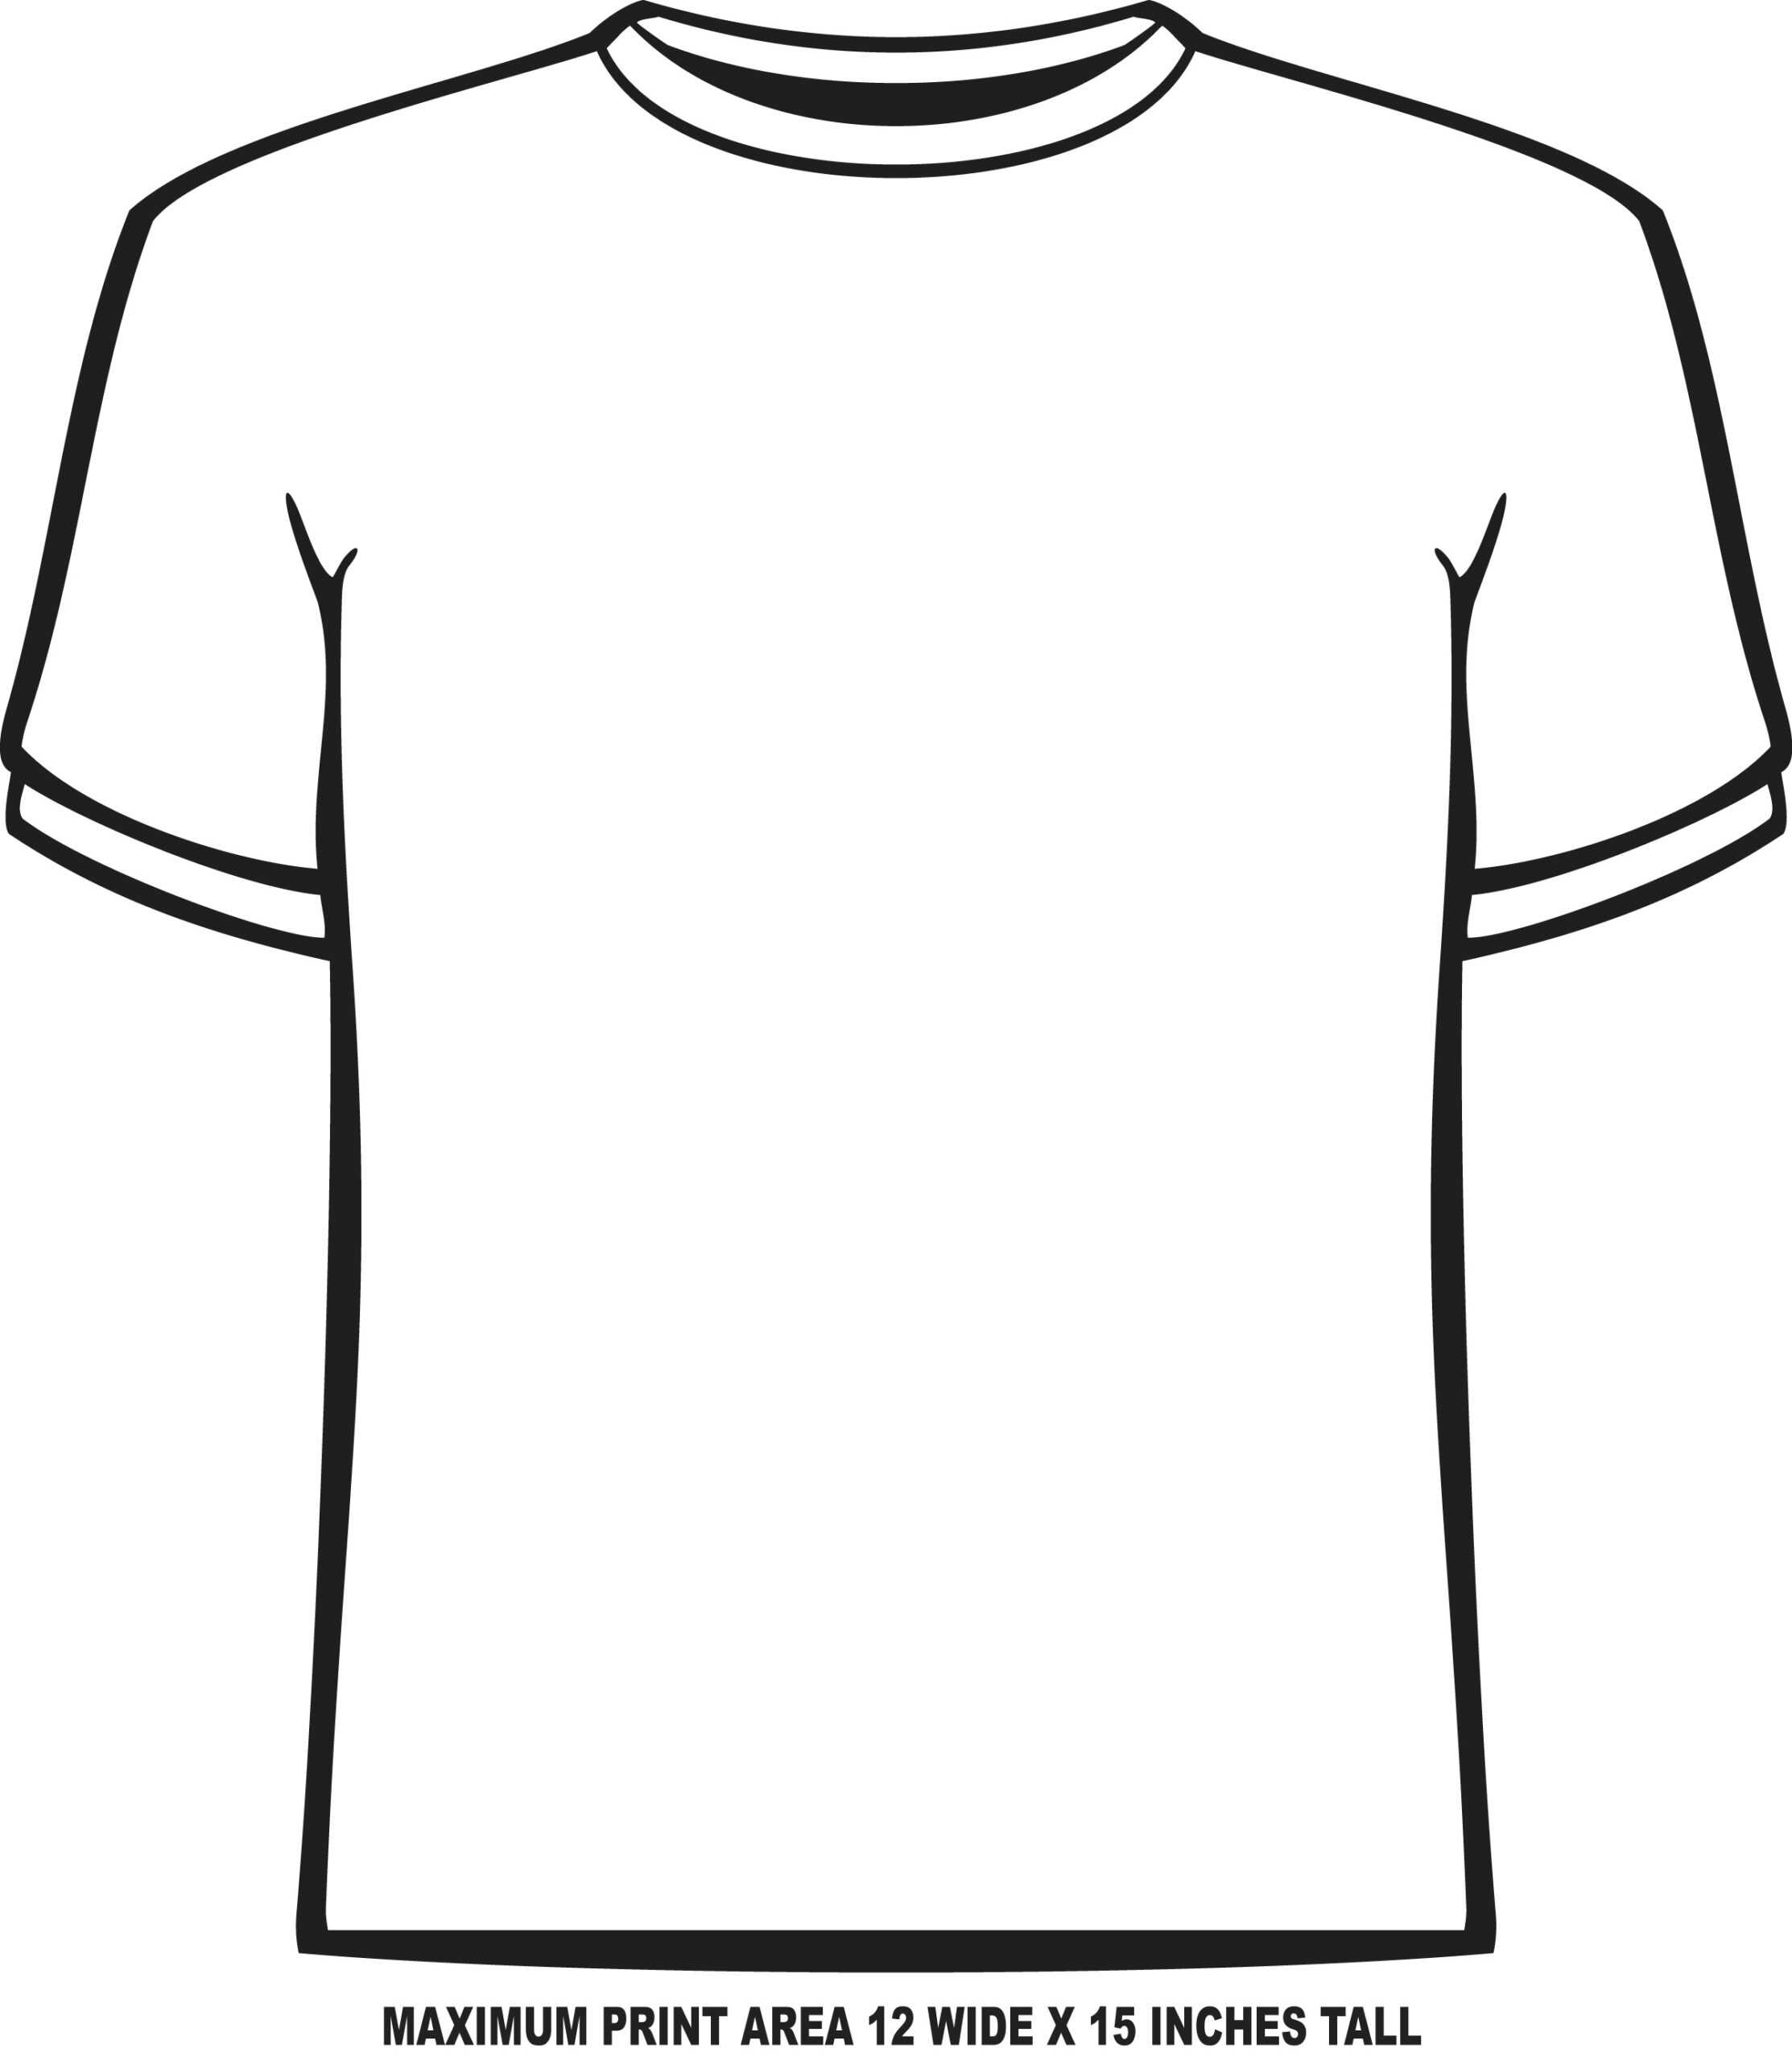 Blank Tshirt Template Pdf - Dreamworks Pertaining To Blank Tshirt Template Pdf